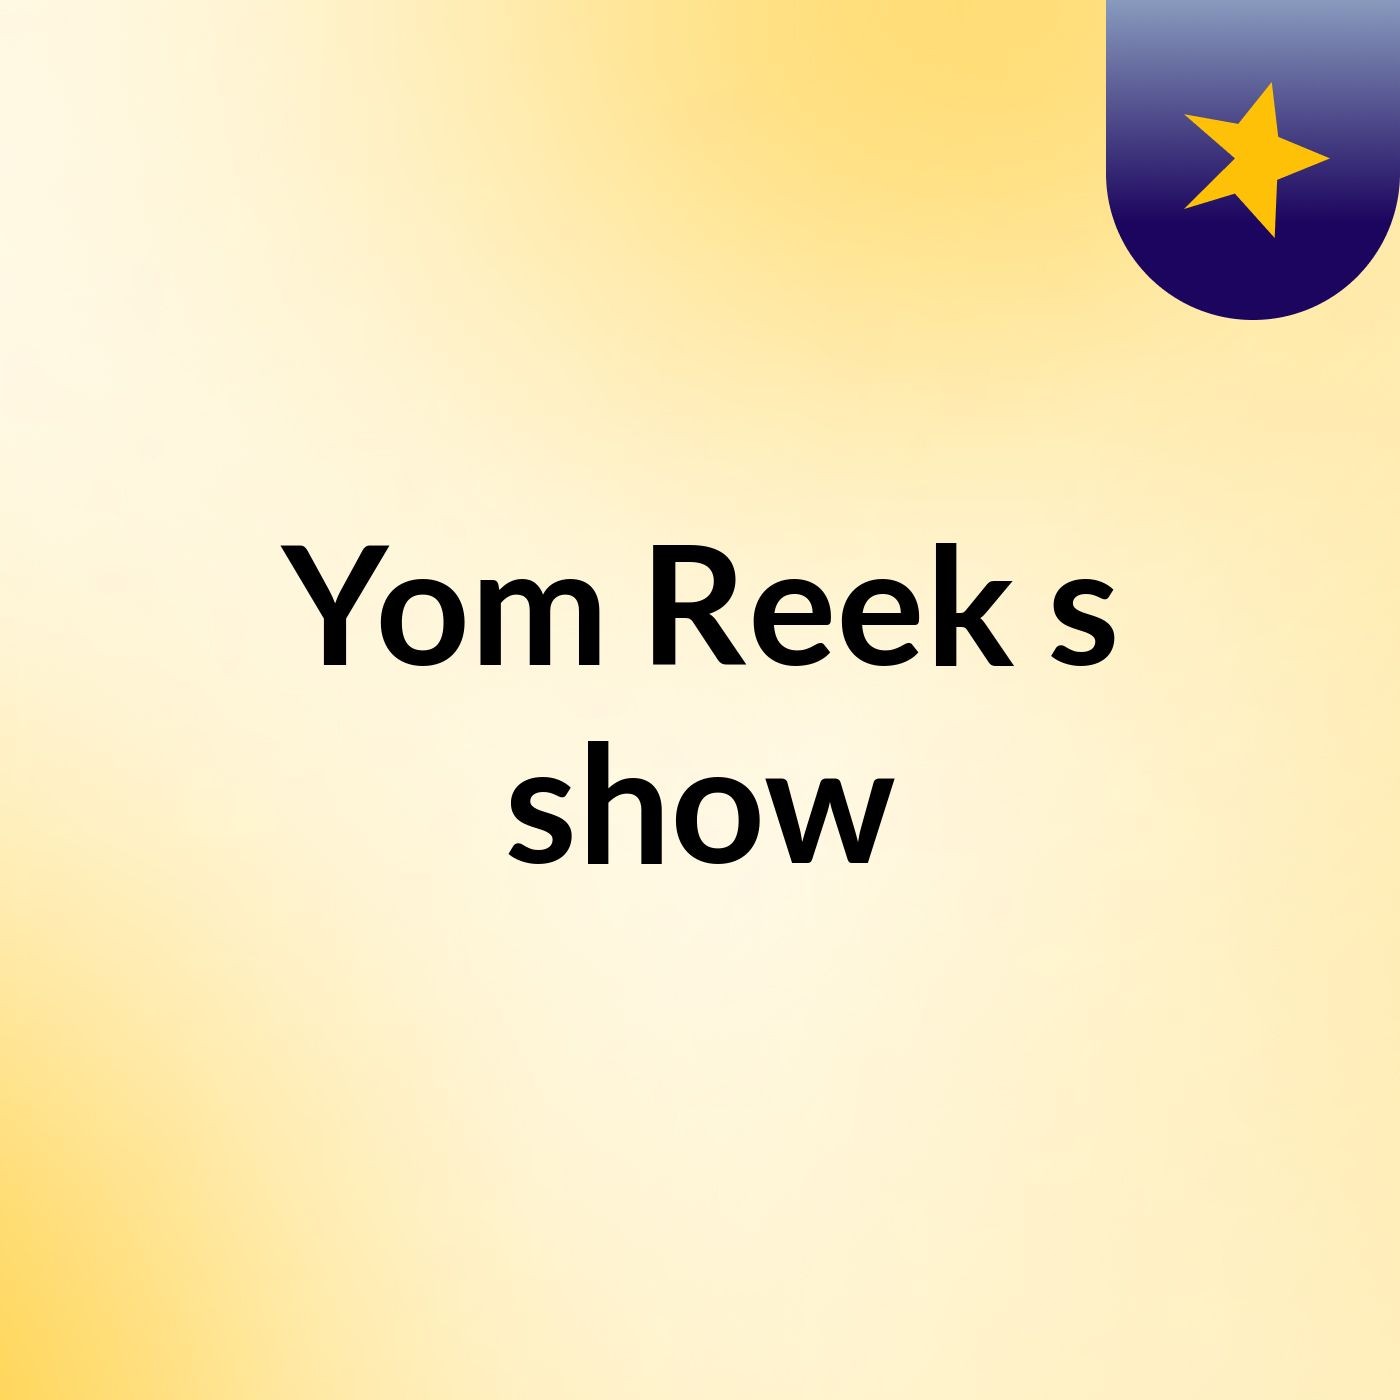 Yom Reek's show